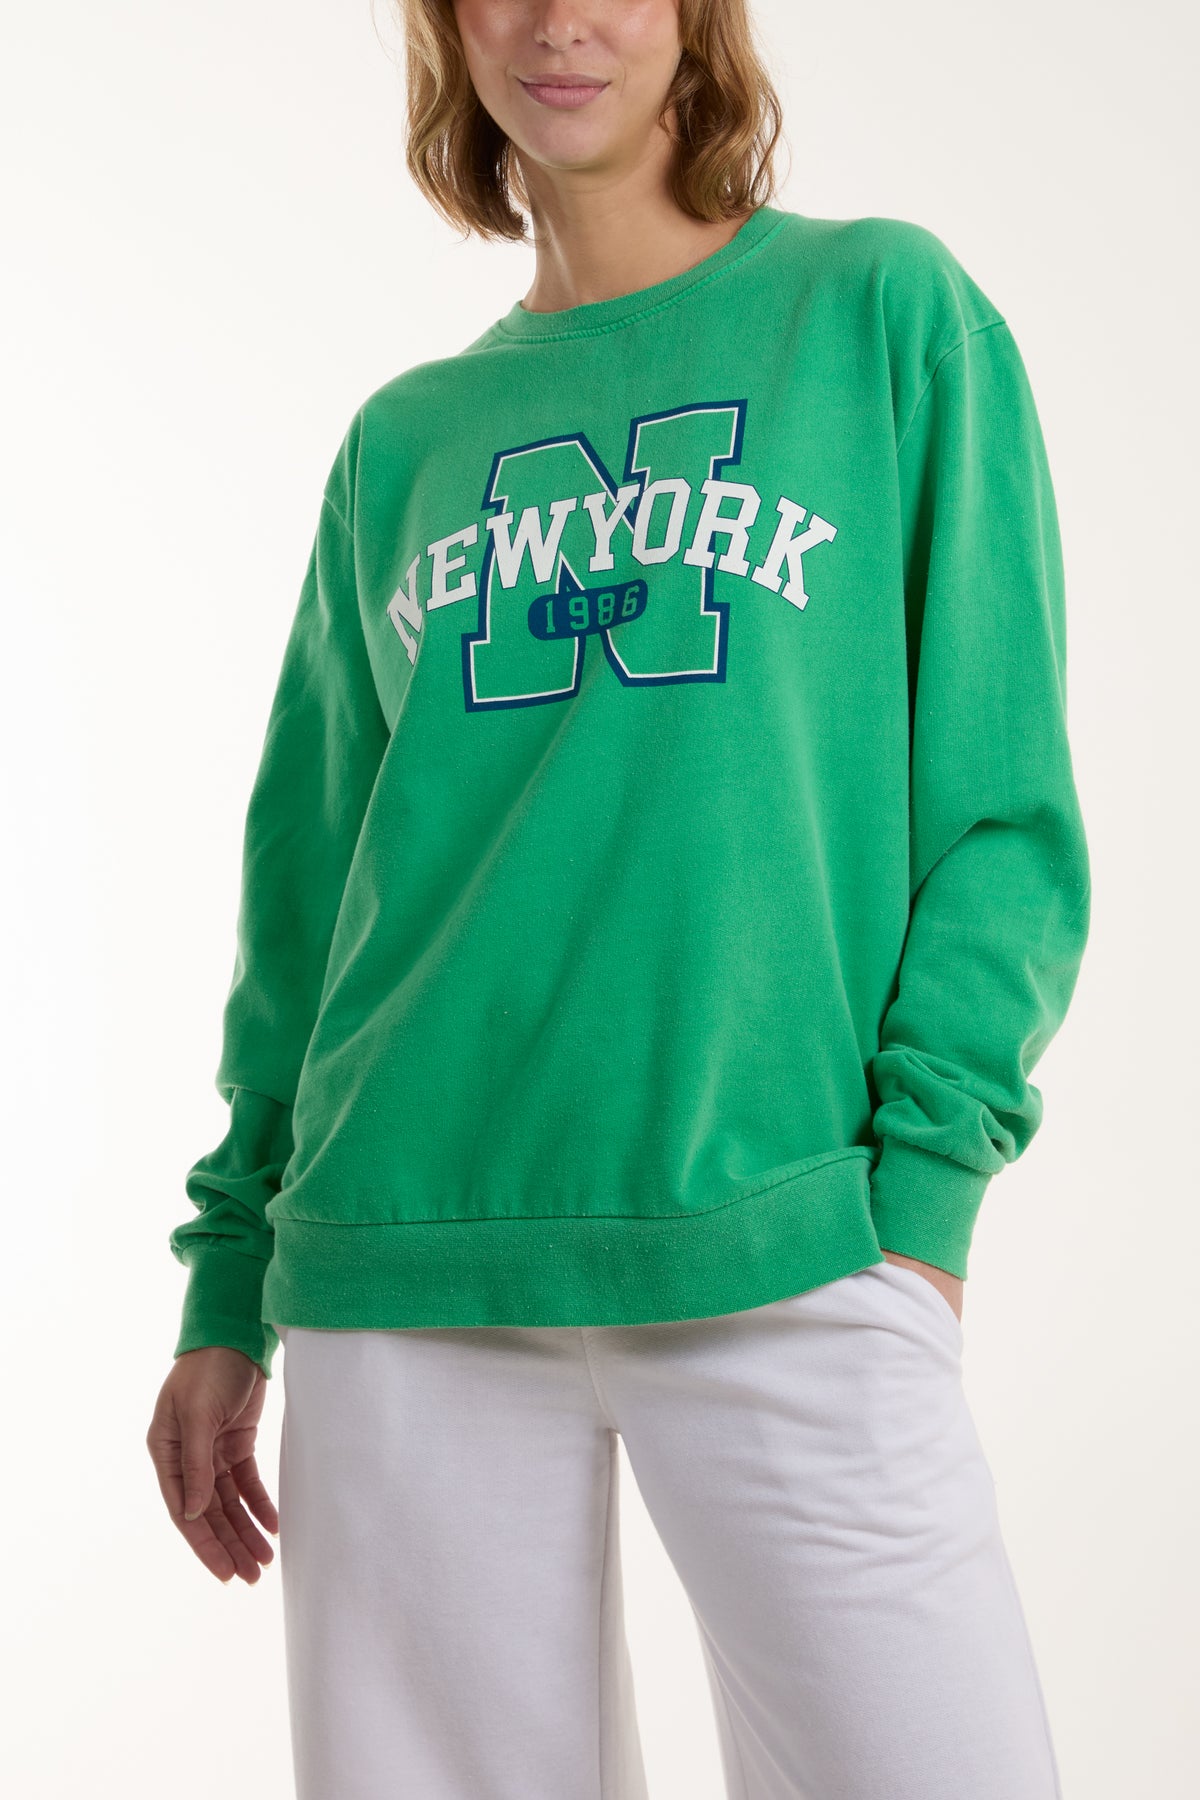 New York Print Sweatshirt